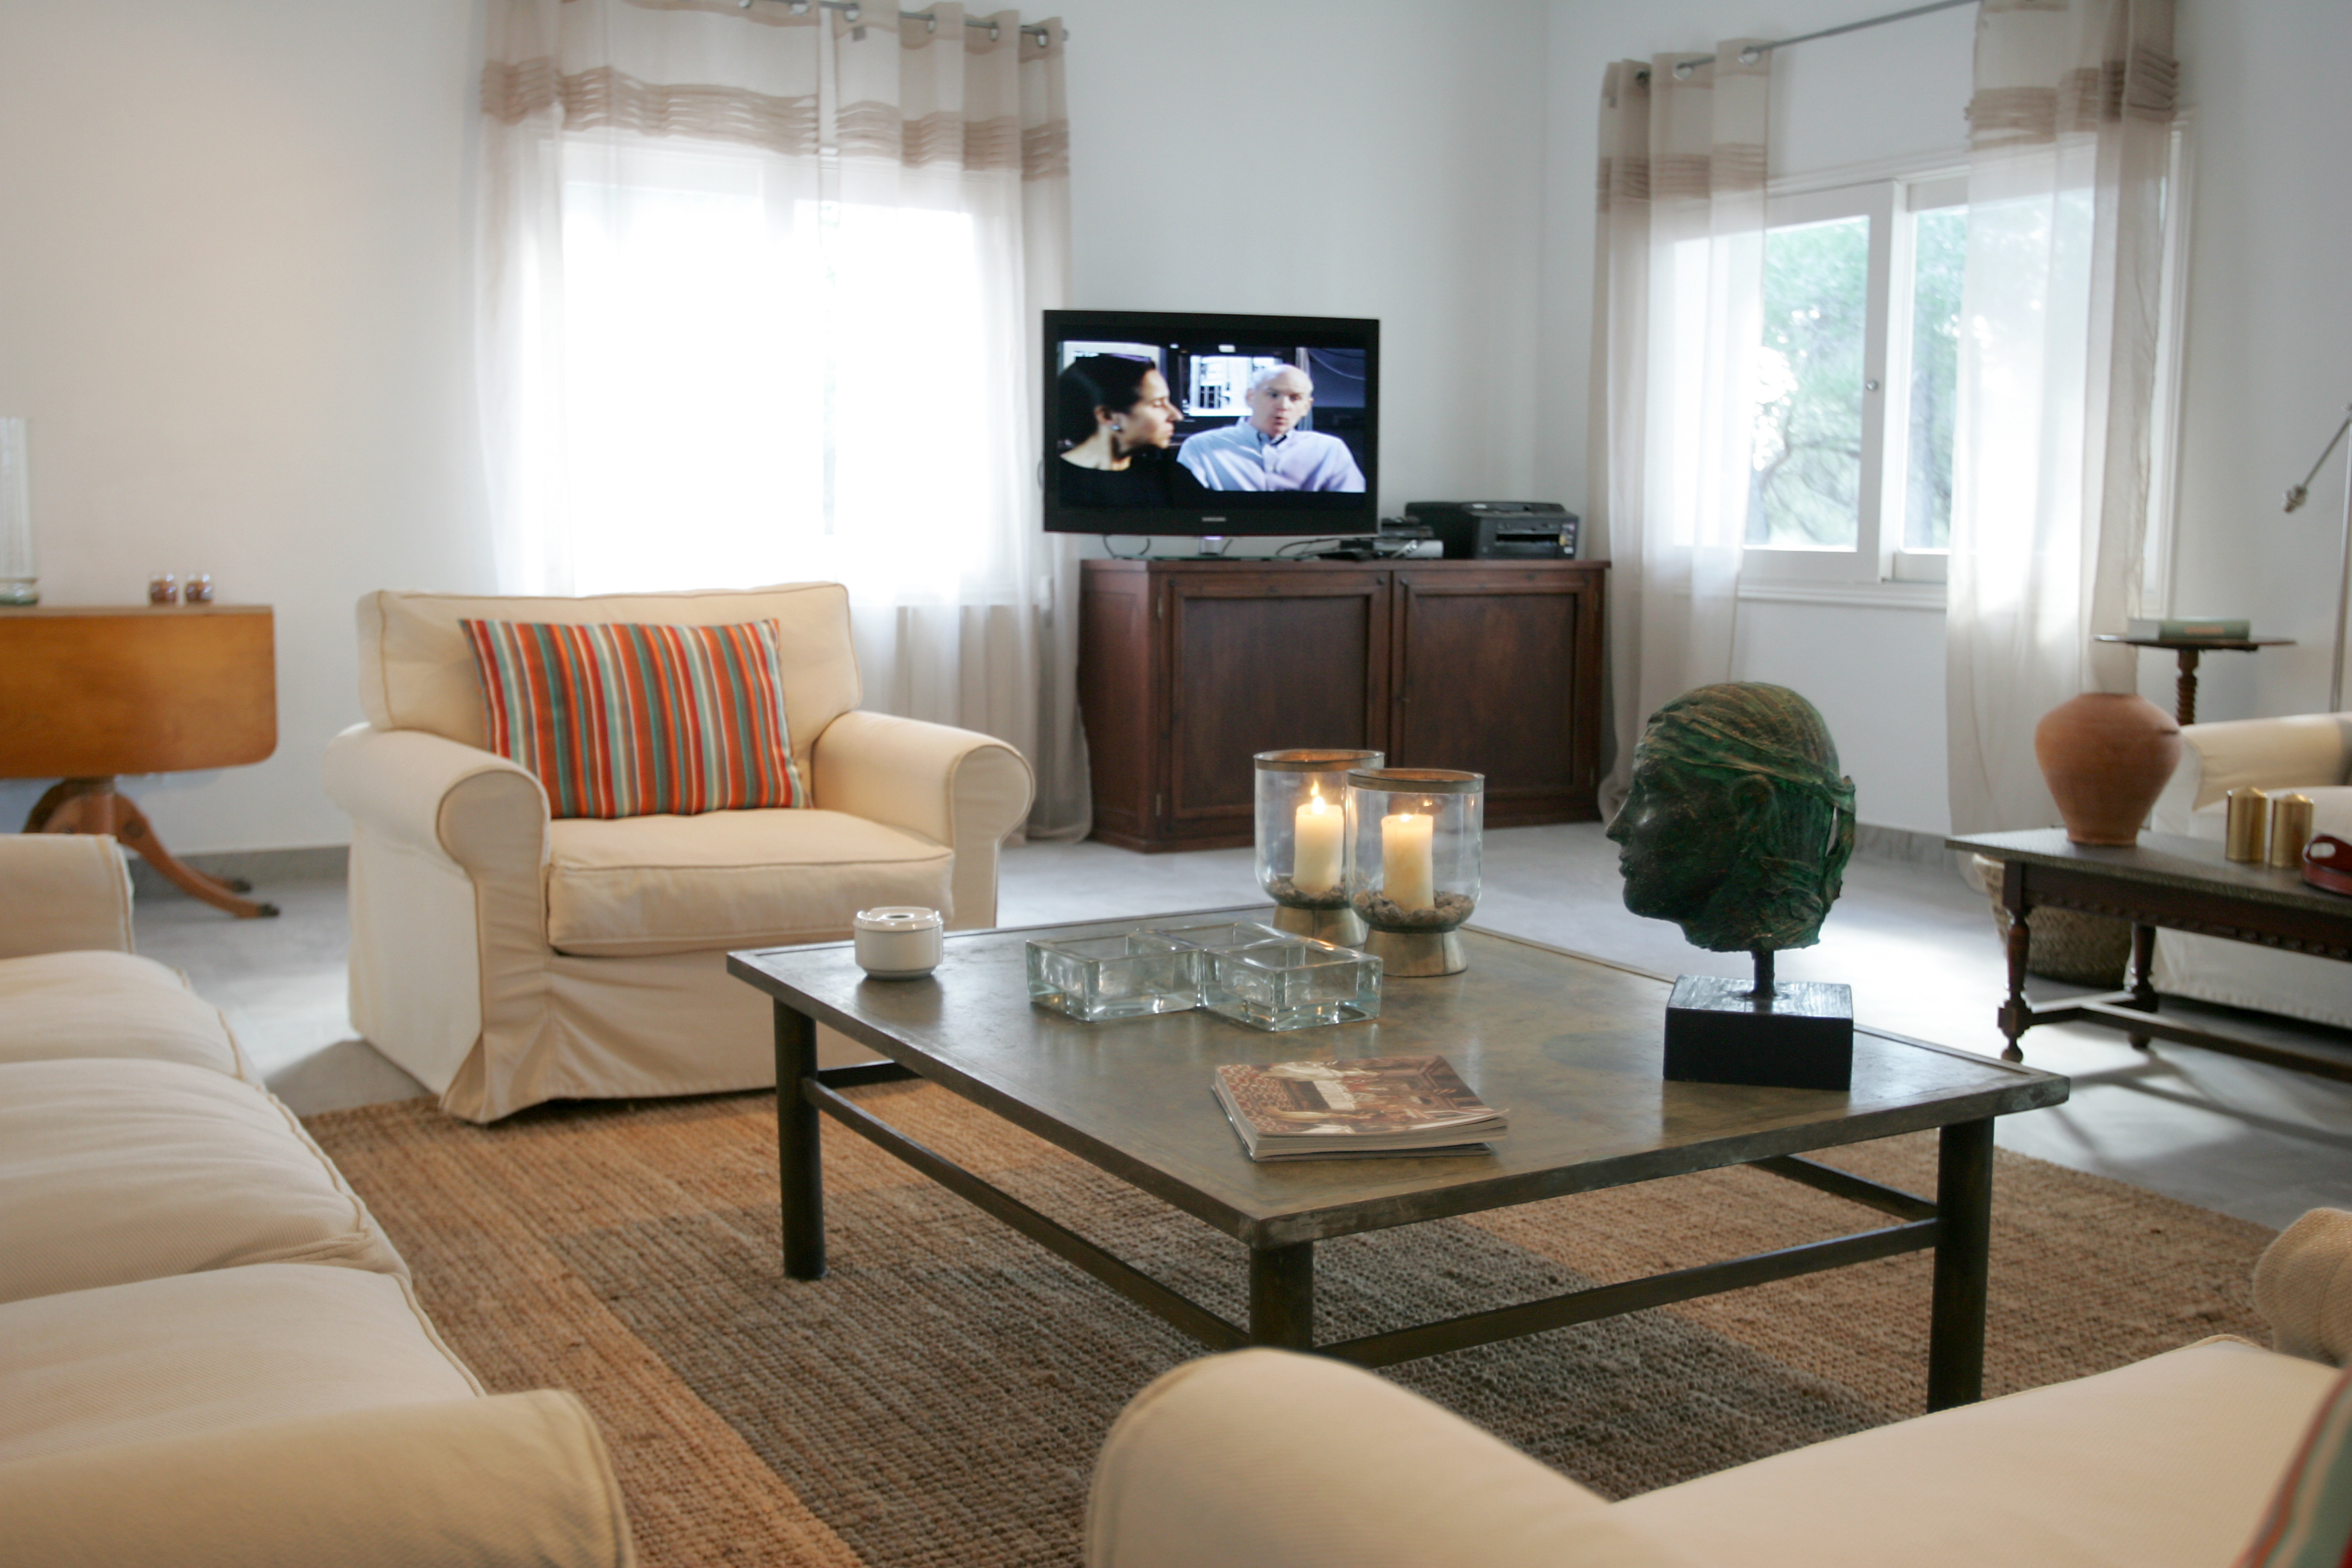 resa estates rental villa 2022 low prices license nederland ibiza can marlin livingroom.JPG